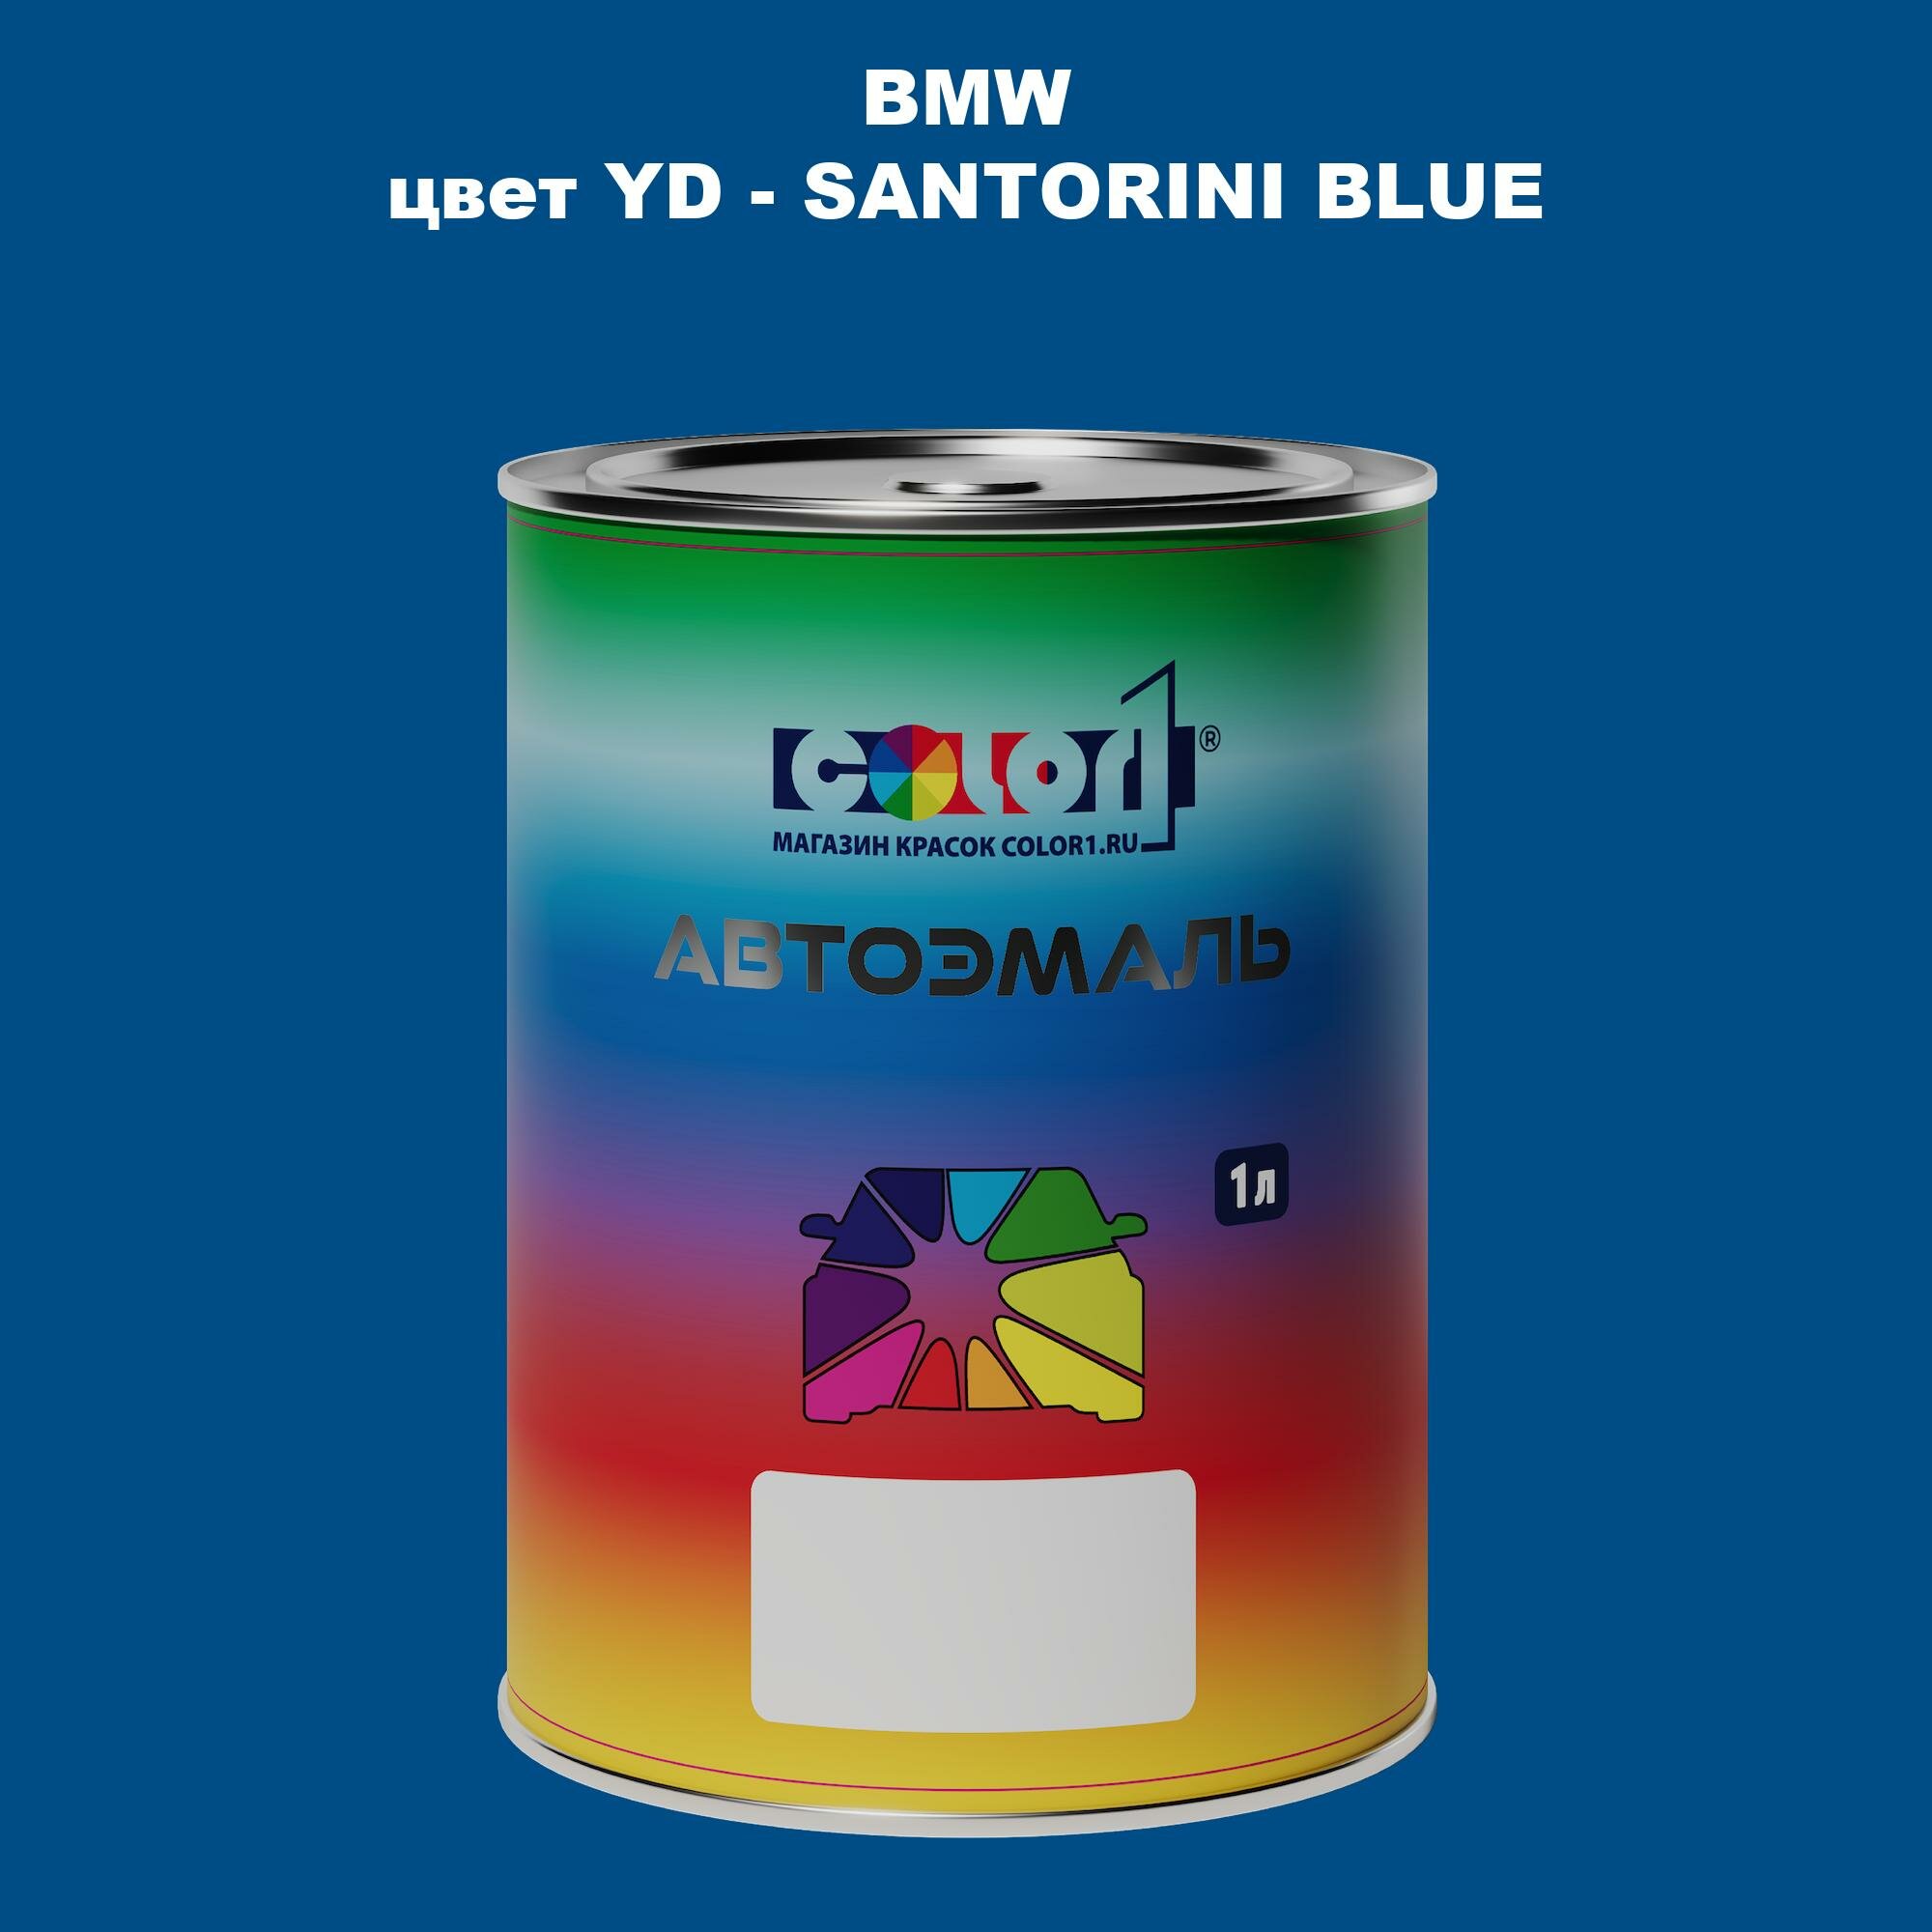 Автомобильная краска COLOR1 для BMW, цвет YD - SANTORINI BLUE